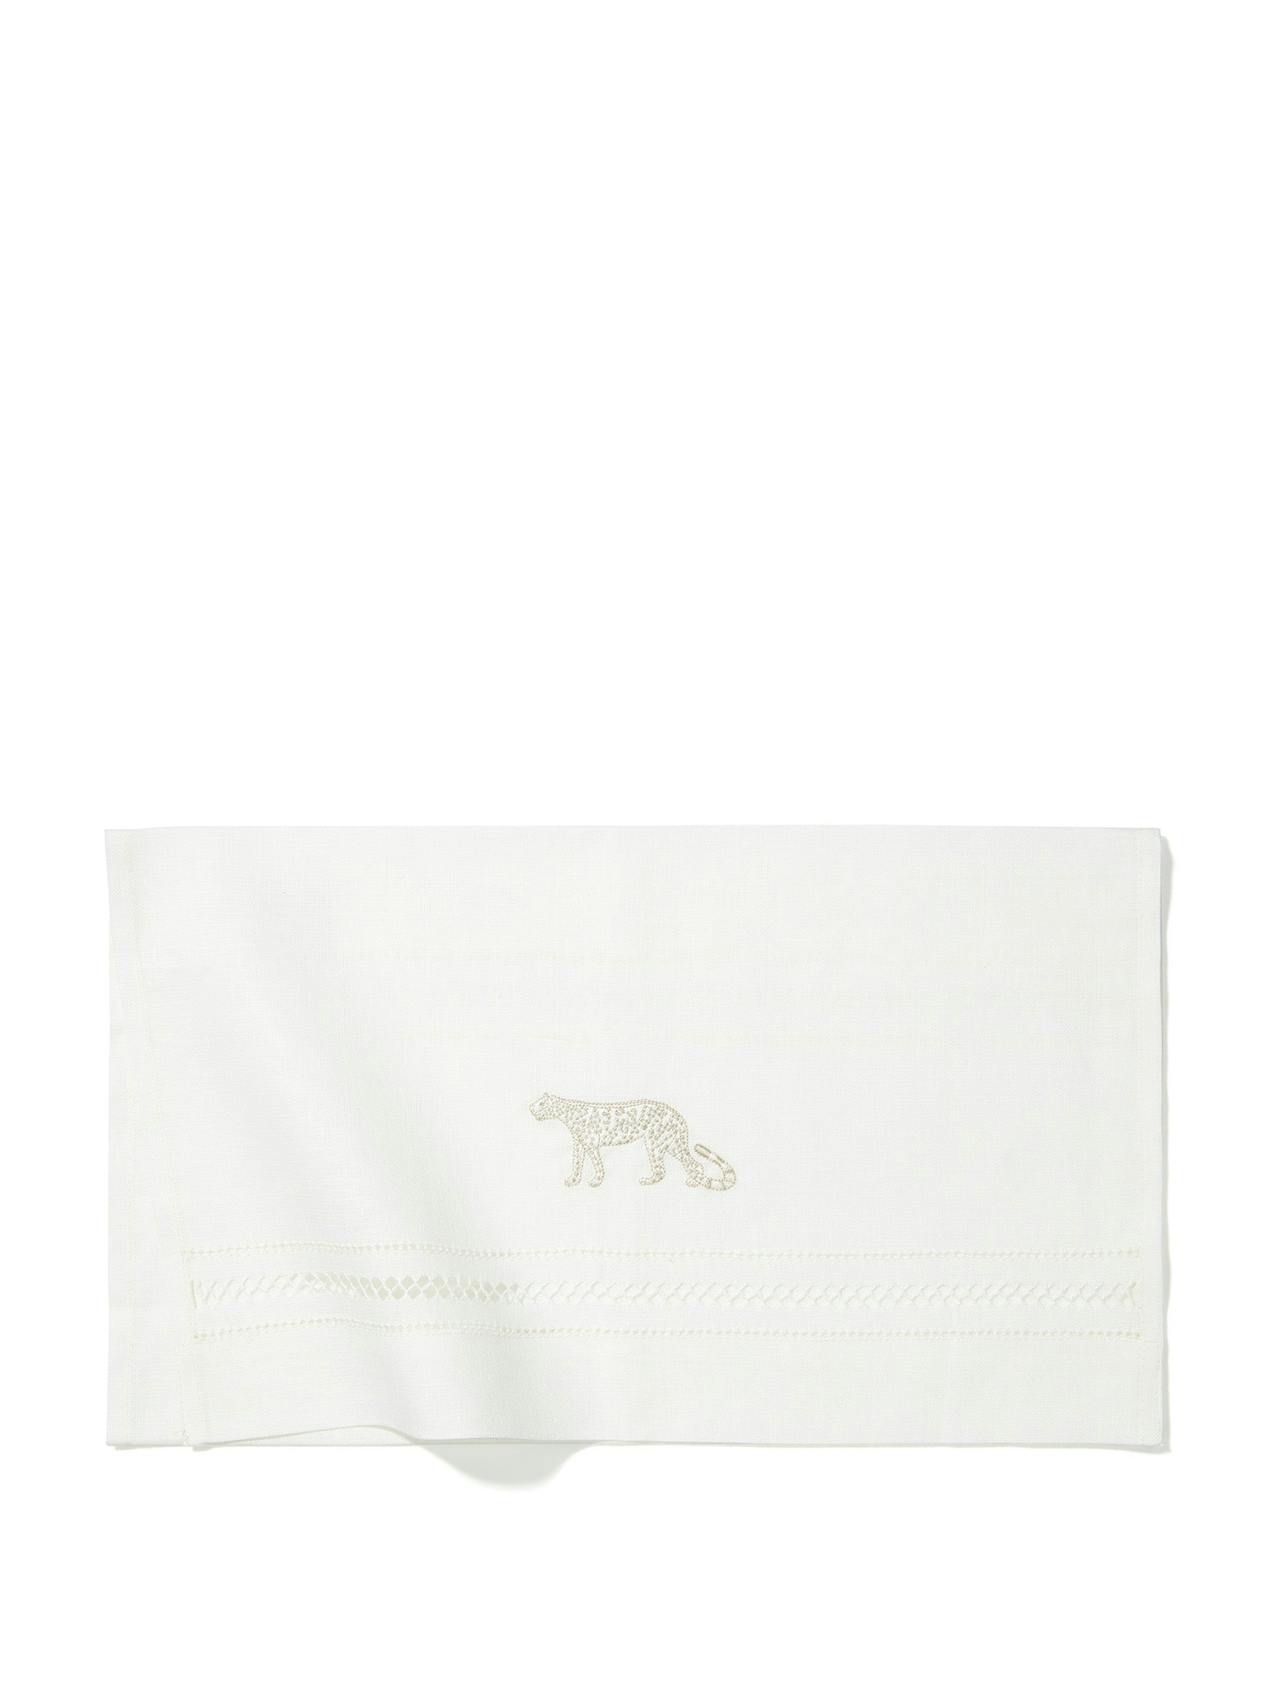 Leopard embroidery diamond stitch hand towel